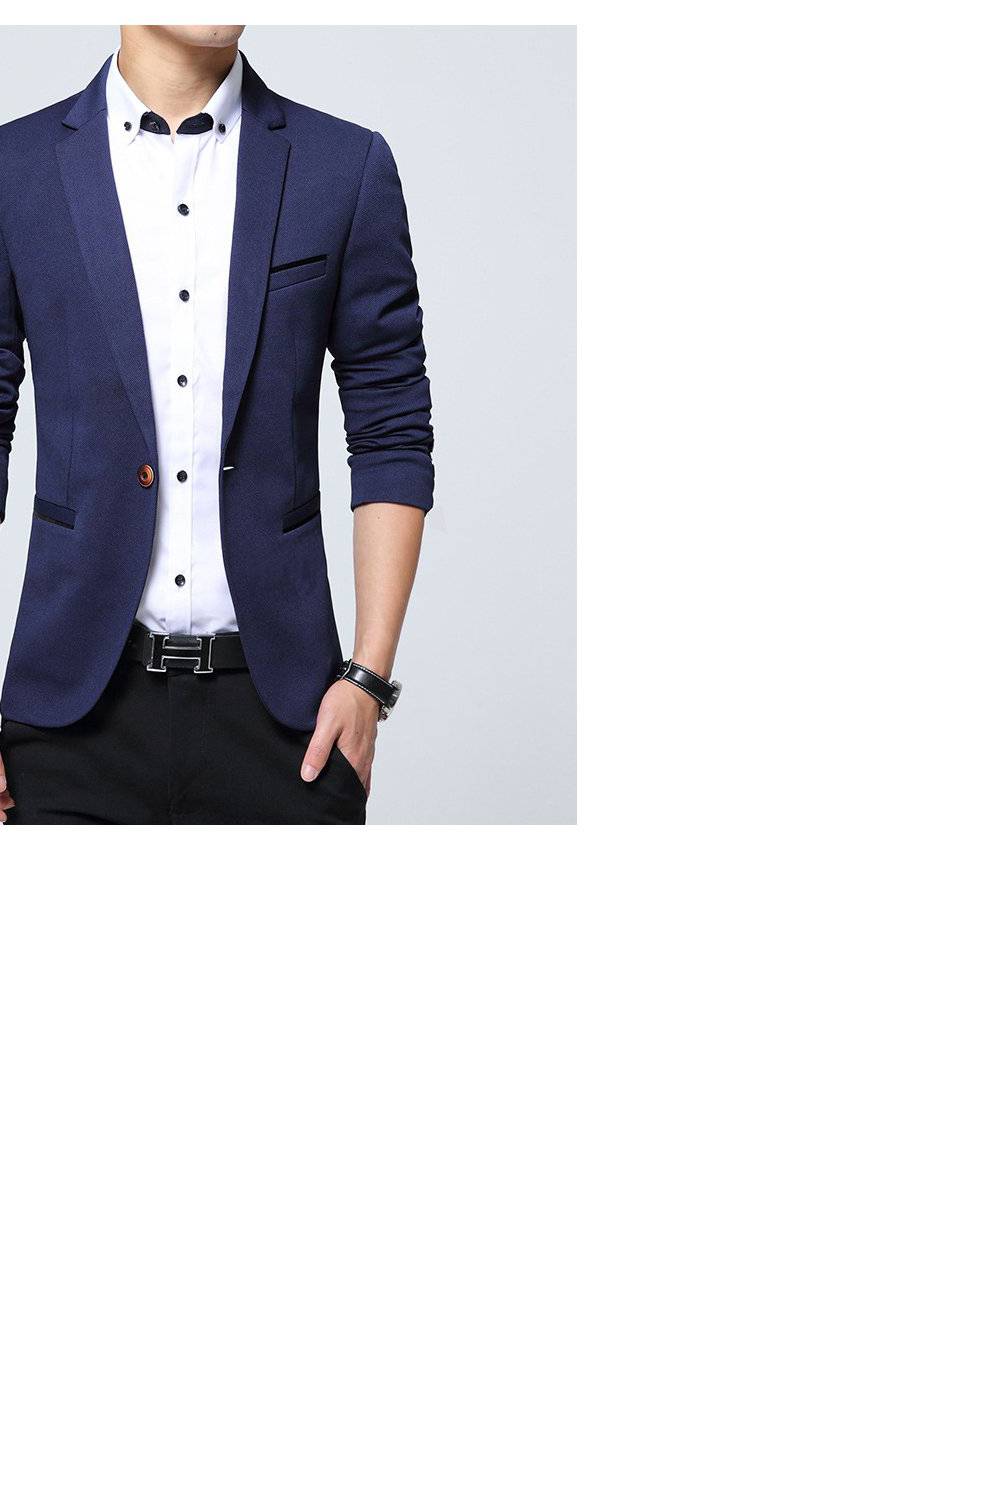 camisa Encantador giro GENERICO 2018 moda marca blazer hombres trajes casuales hombres blazer traje-azul.  | falabella.com